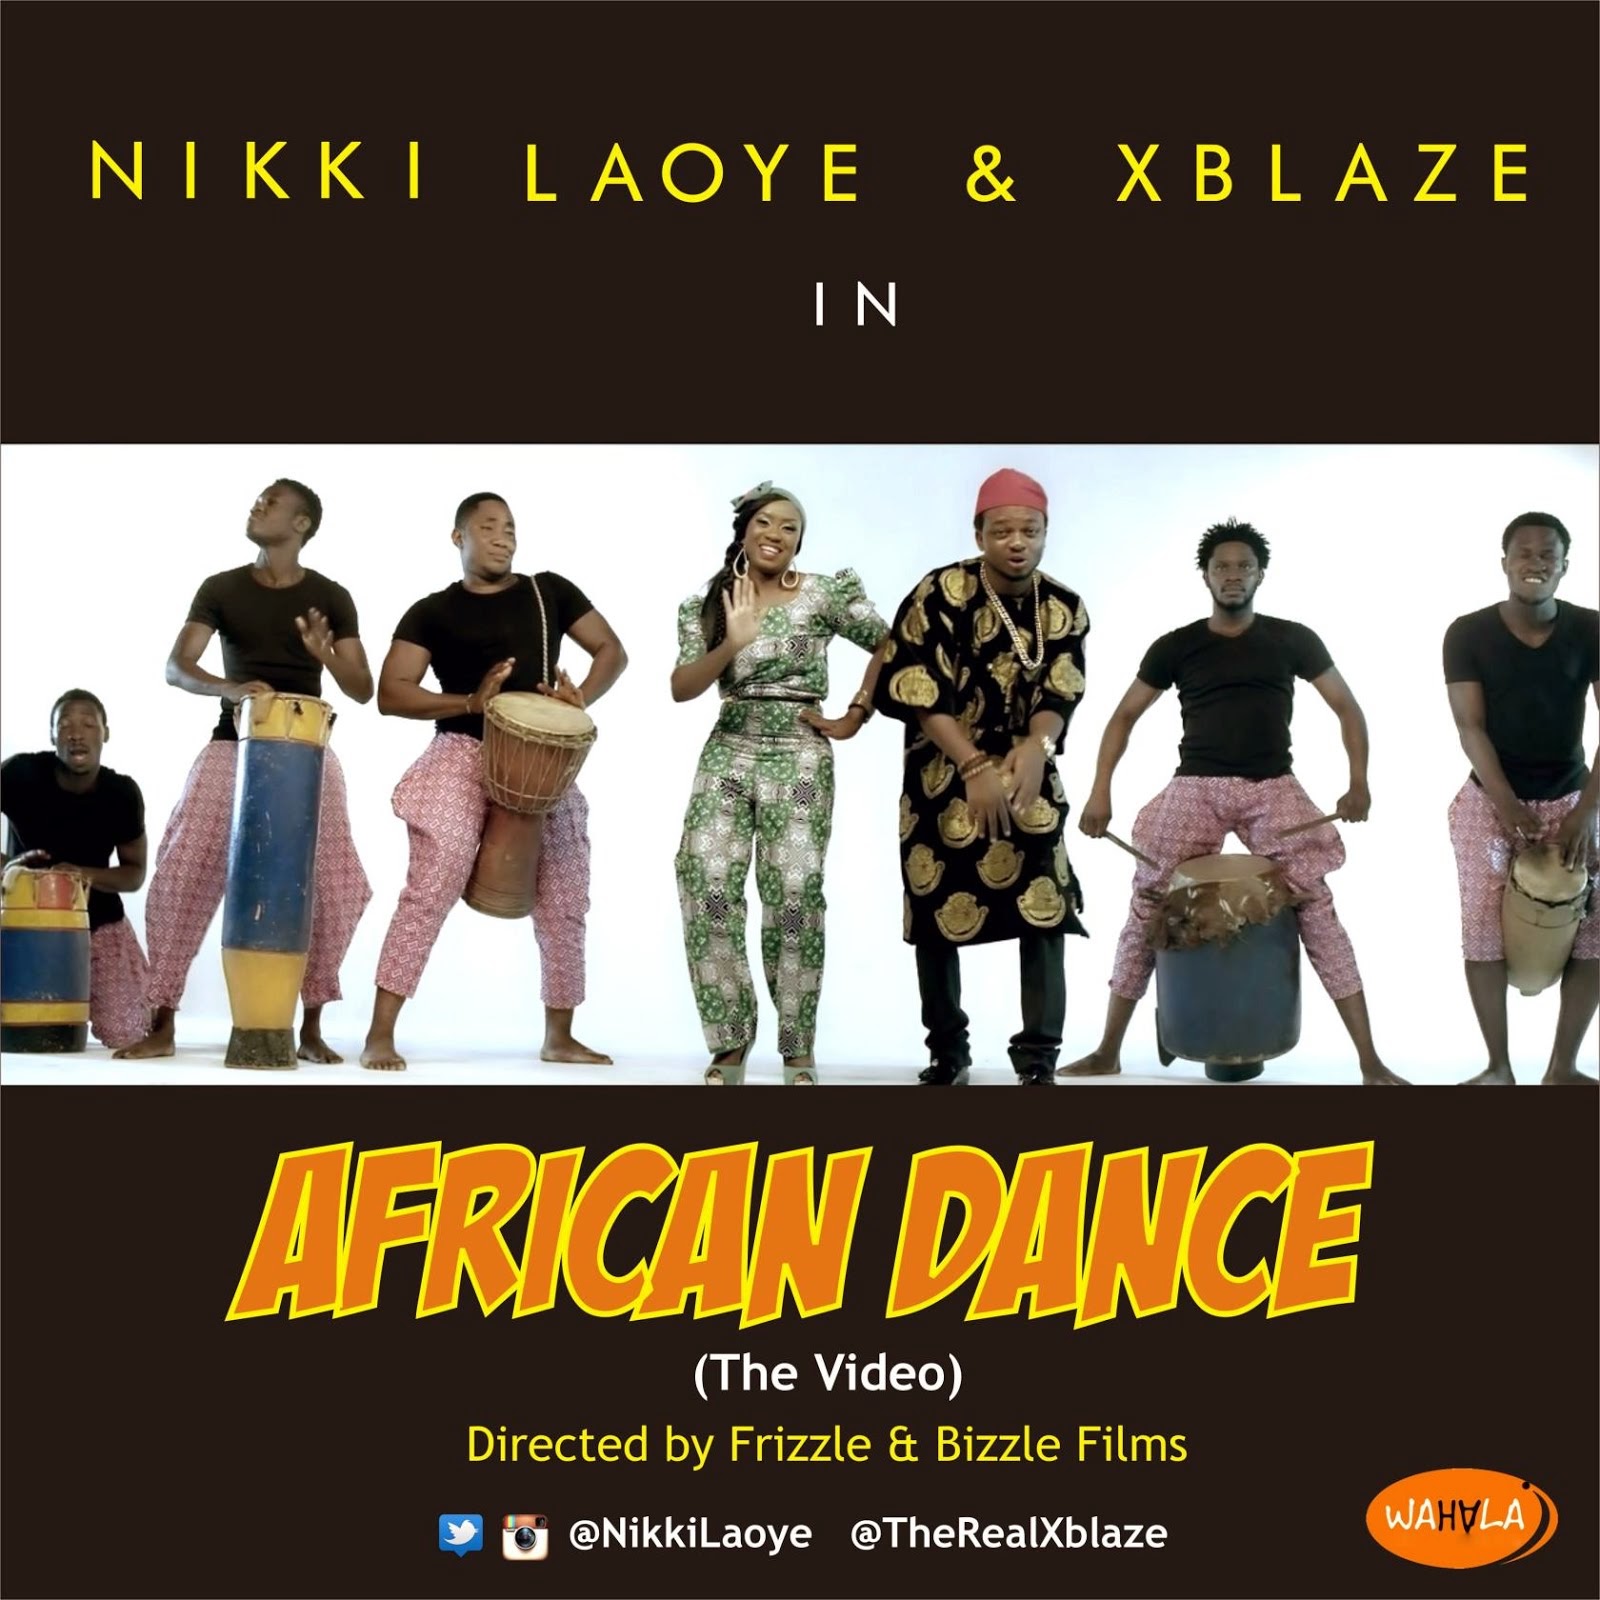 Watch Nikki Laoye & Xblaze - African Dance Video